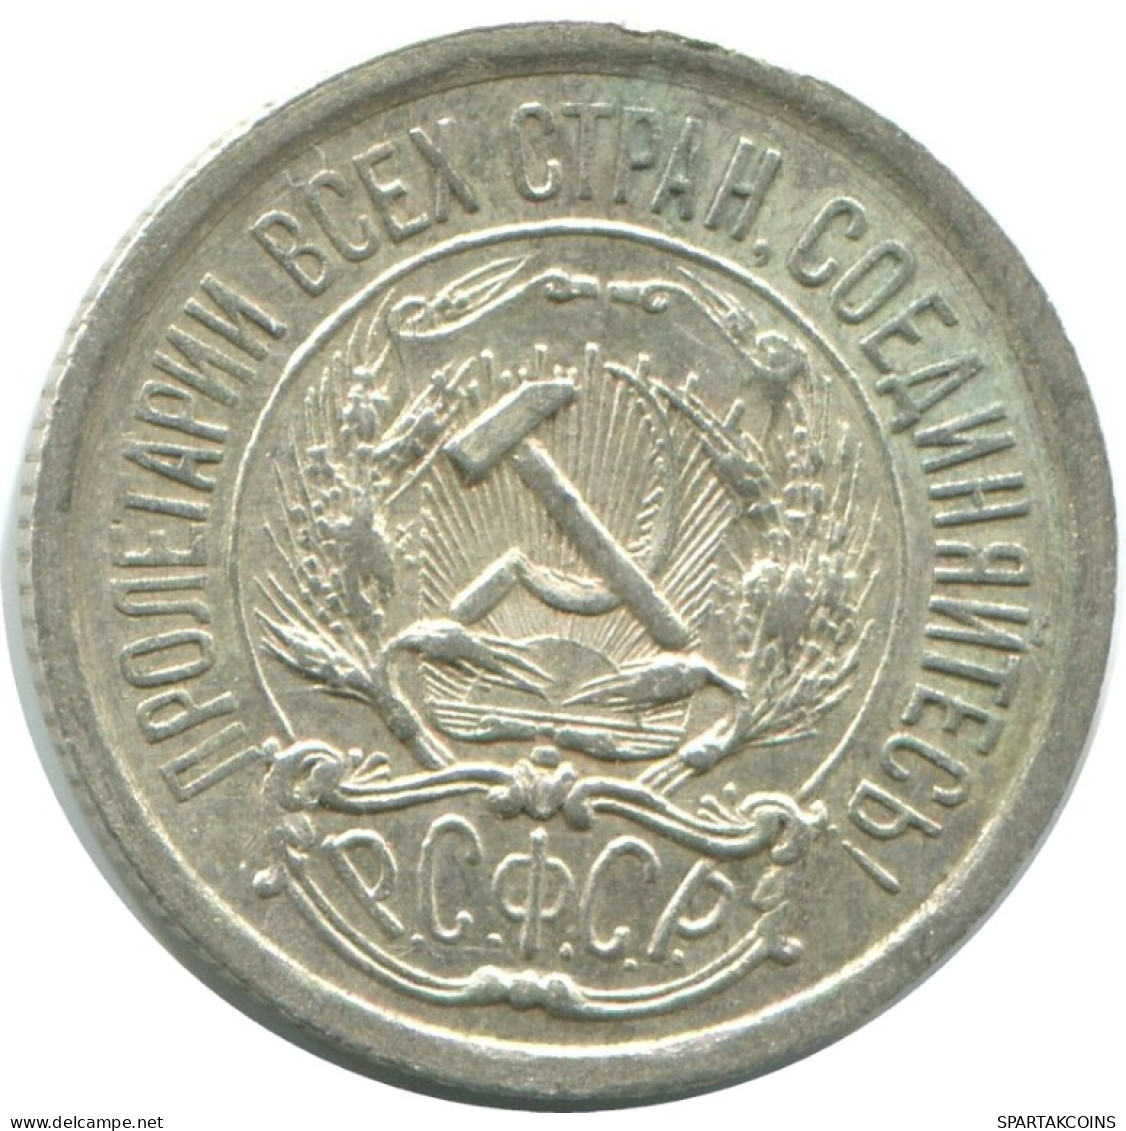 10 KOPEKS 1923 RUSSIA RSFSR SILVER Coin HIGH GRADE #AE914.4.U.A - Russia